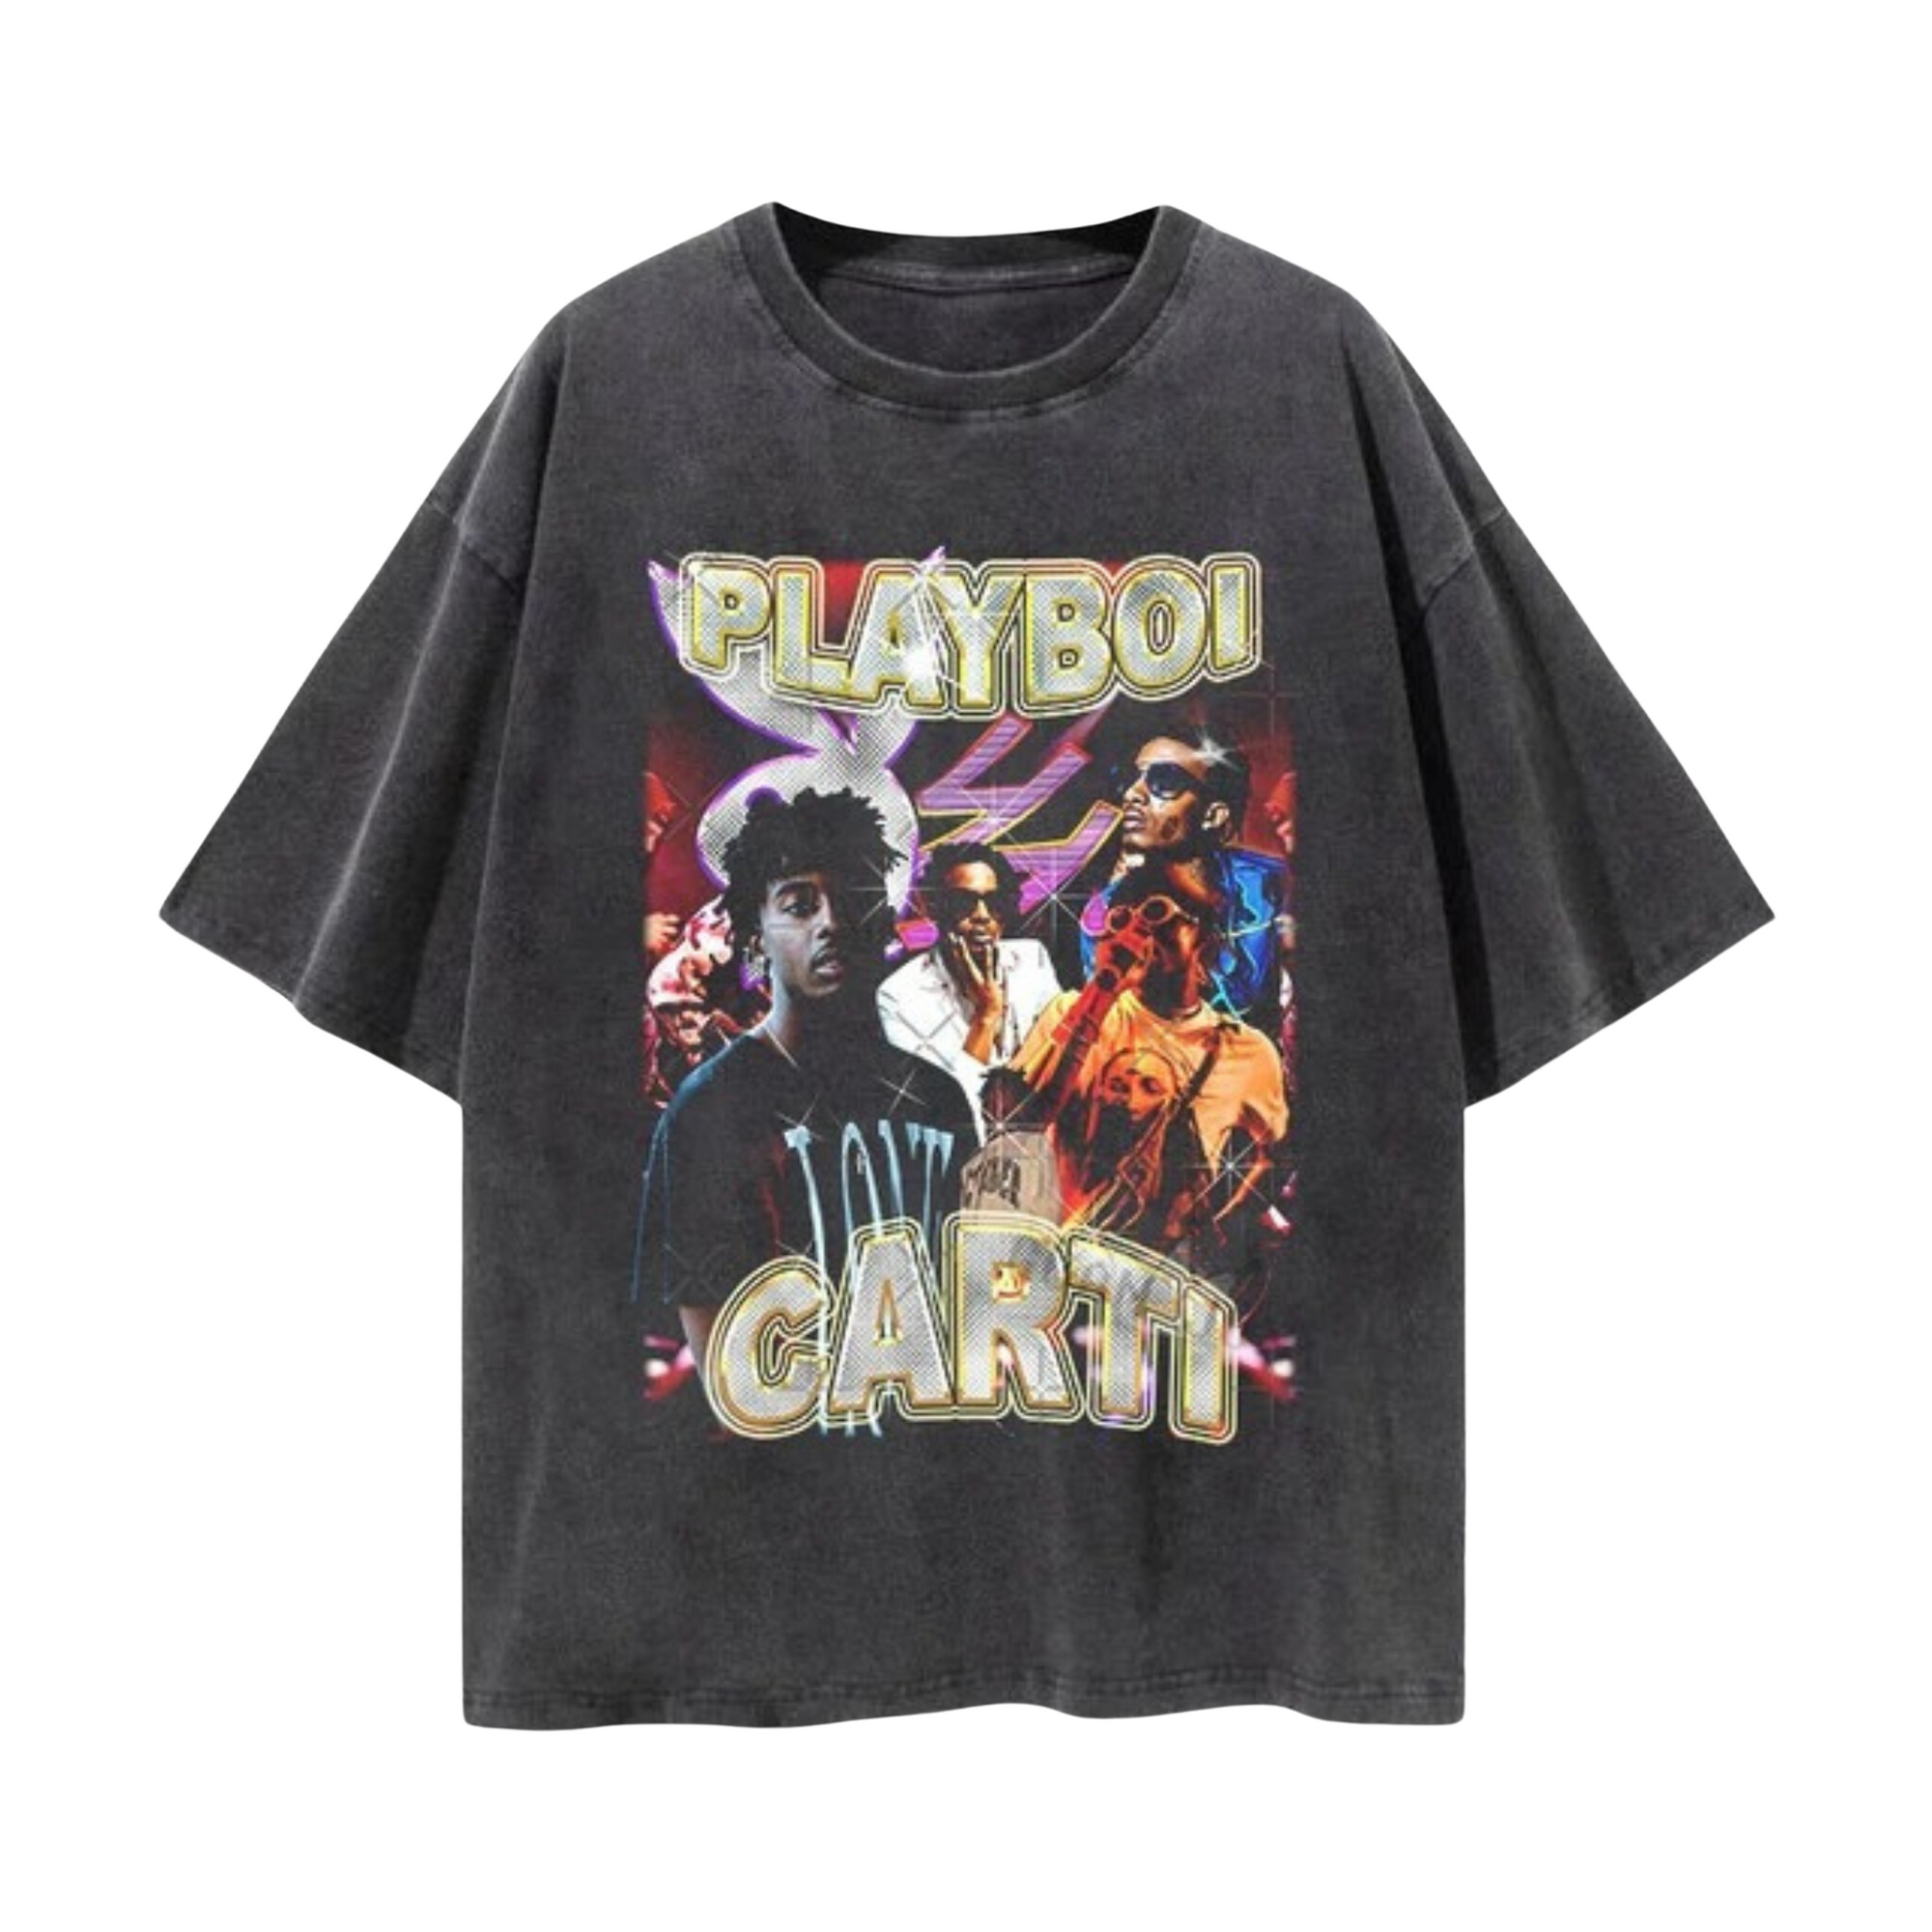 PlayBoi Carti Y2K T-Shirt